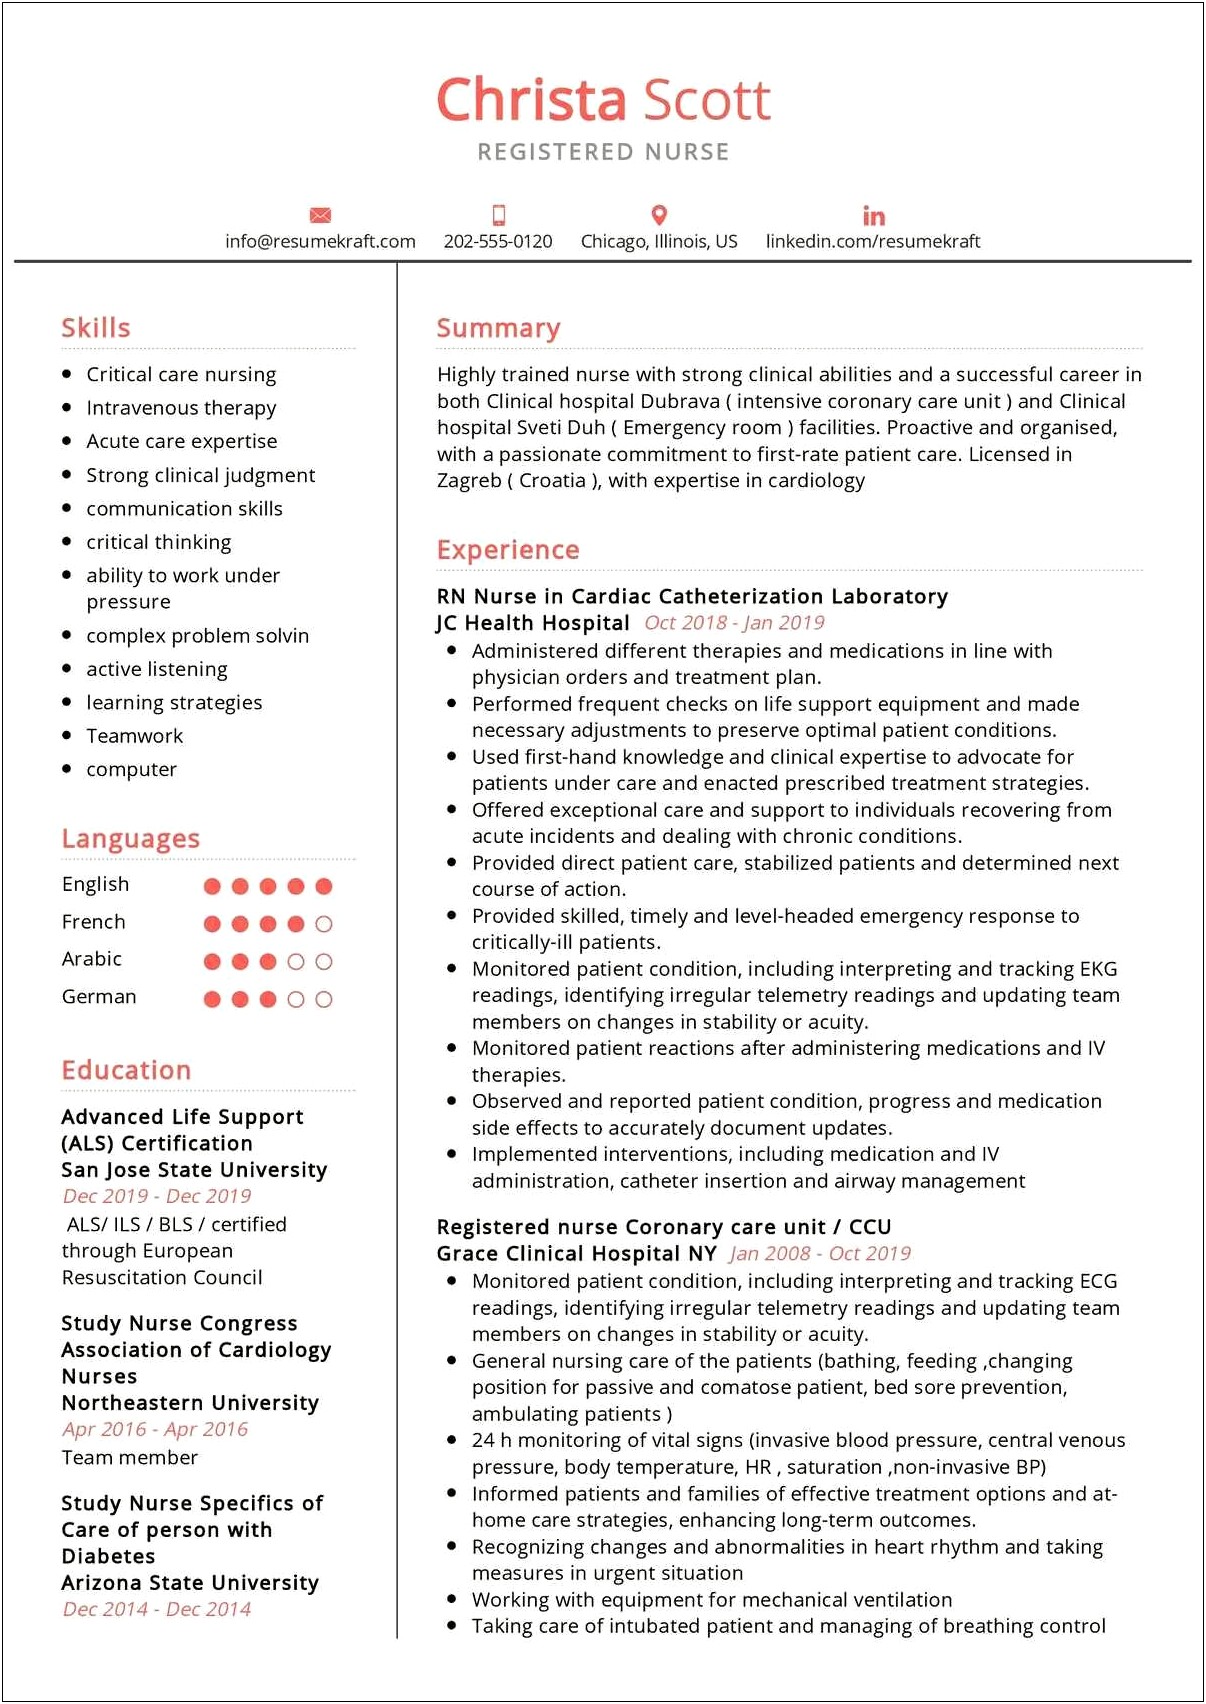 Nursing Resume With Intermediate Care Unit Sample